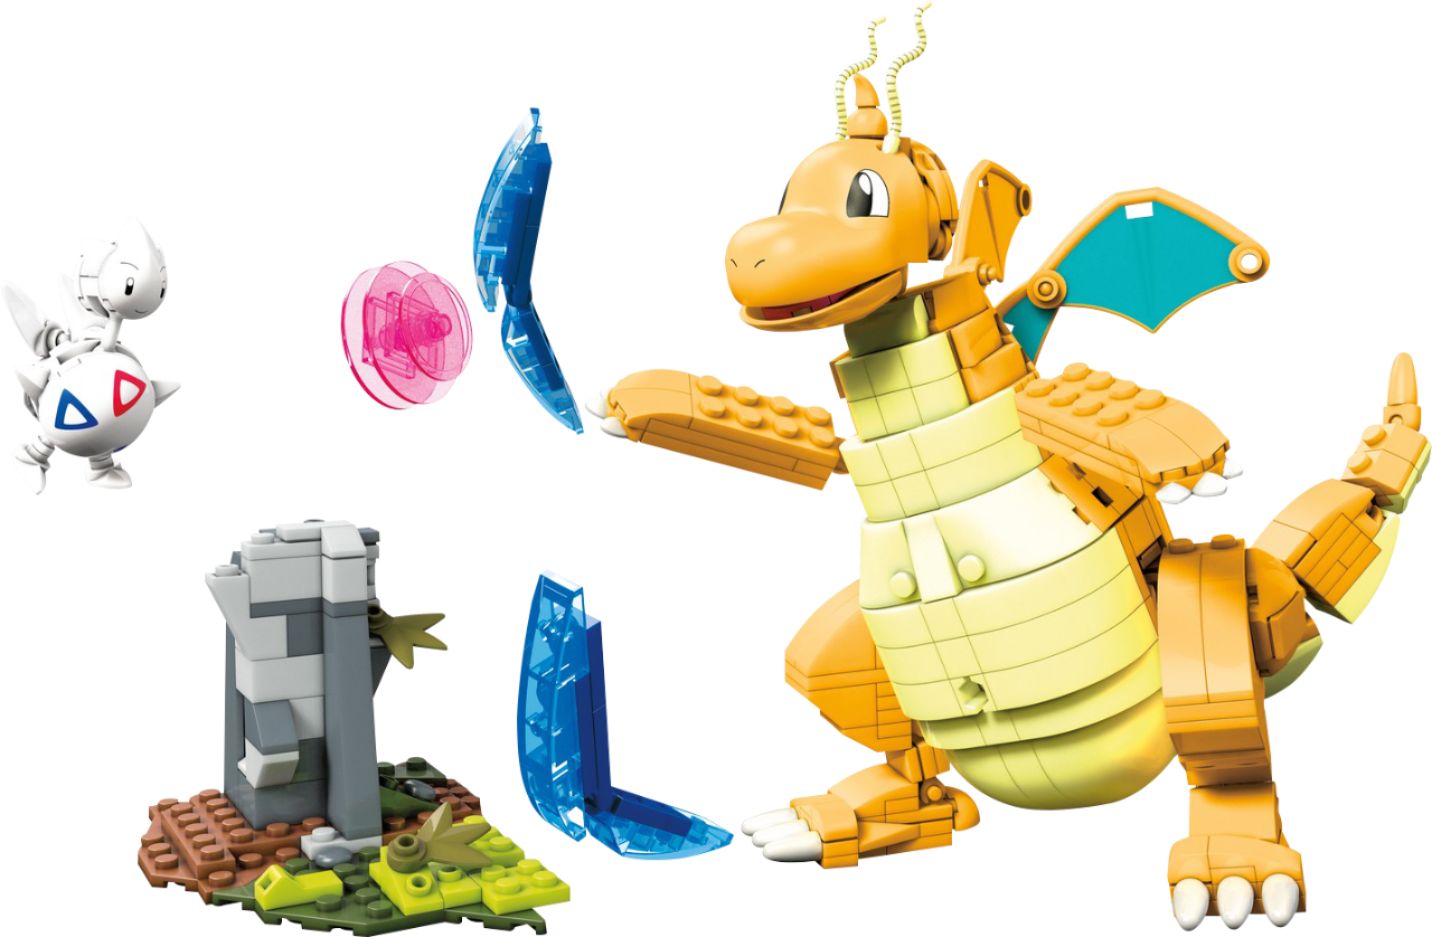 Pokemon Dragonite Mega Bloks Construx Build With Motion Set HKT25